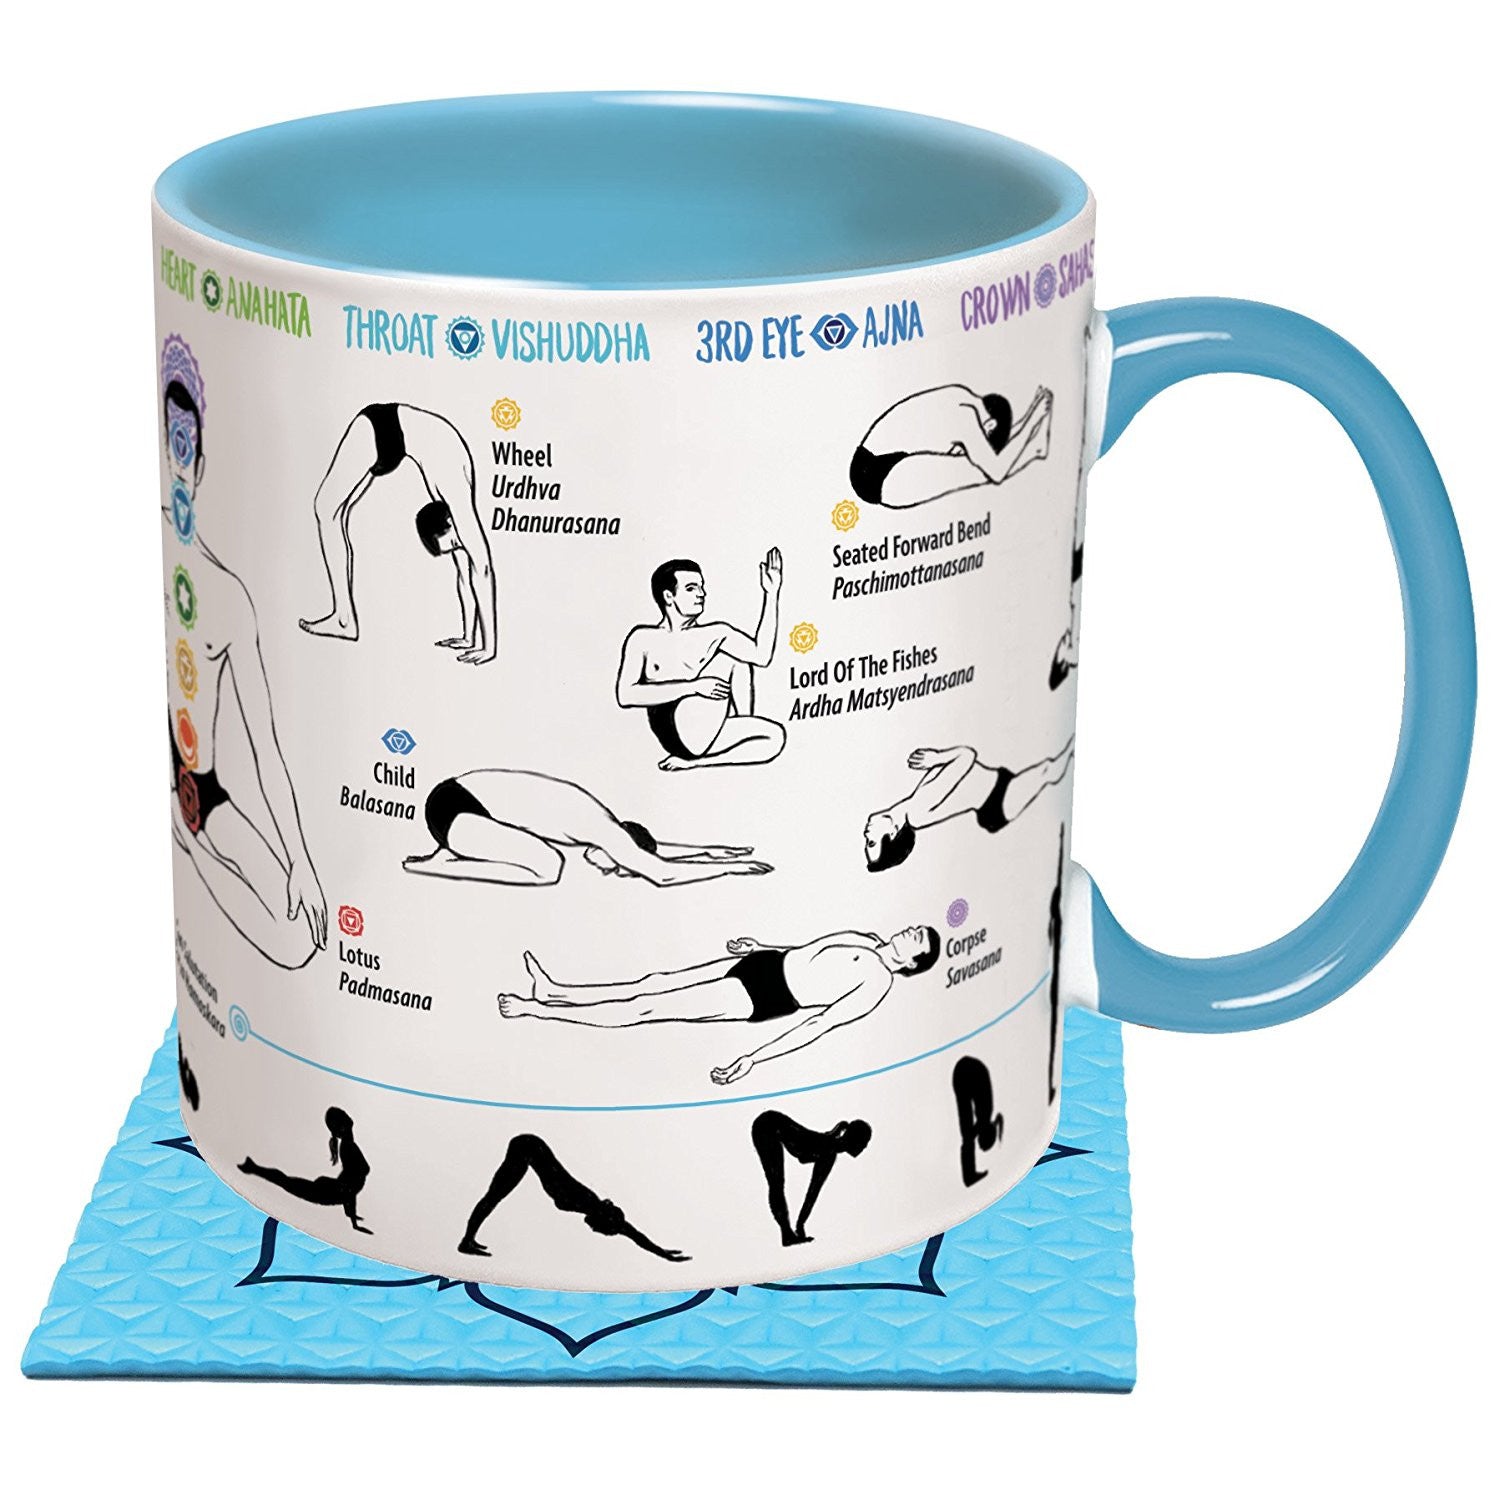 Yoga Coffee Mug - Learn Yoga Poses While Drinking Coffee - Includes a Yoga Mat Coaster